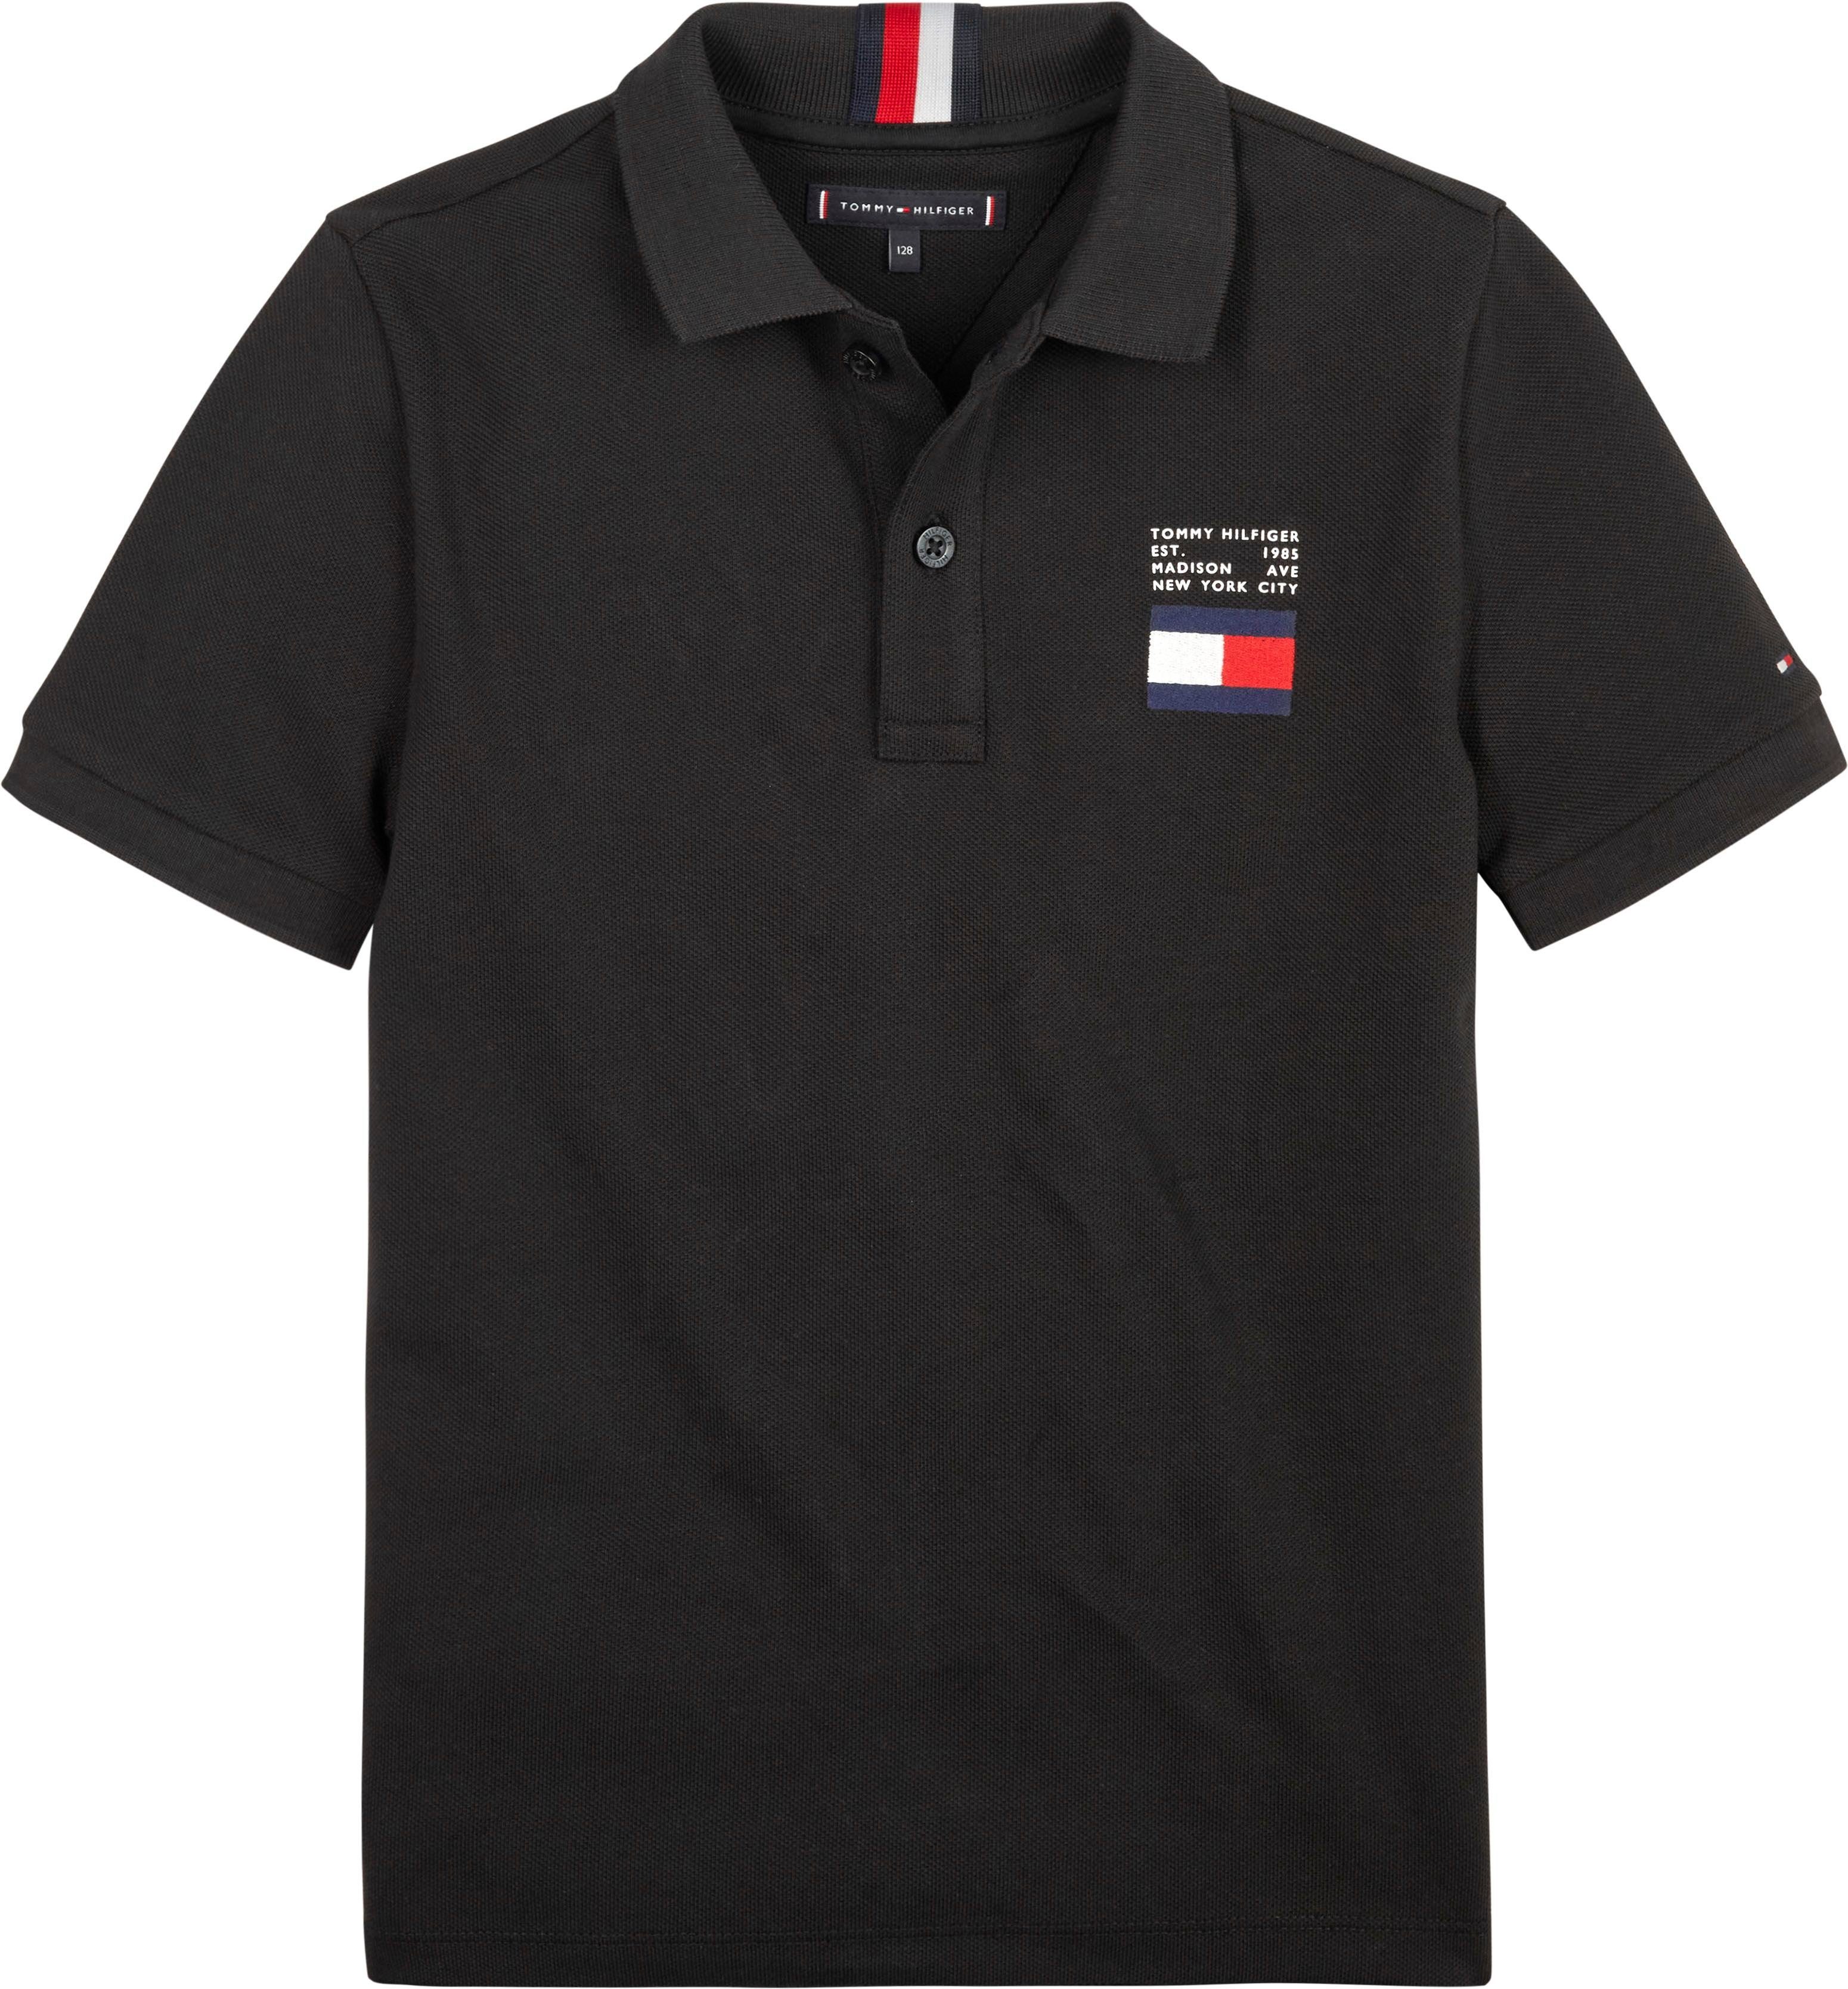 ui haag Vergevingsgezind Tommy Hilfiger Poloshirt TH FLAG POLO S/S online bestellen | OTTO